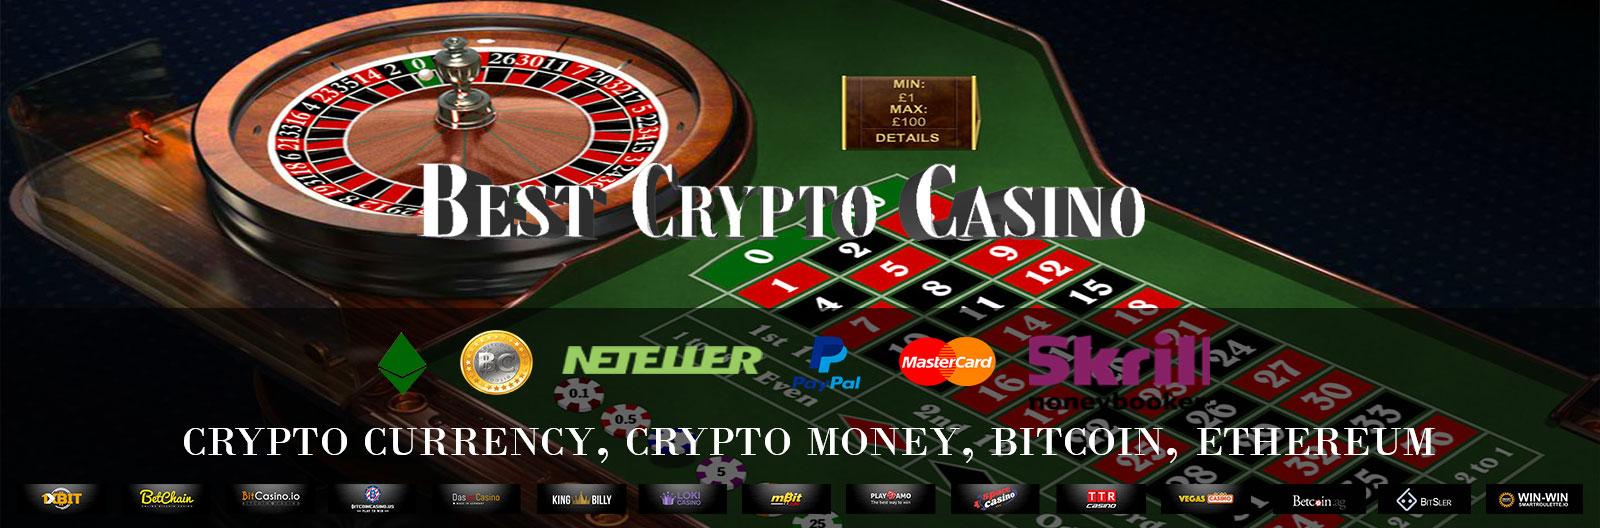 Online casino bingo for money